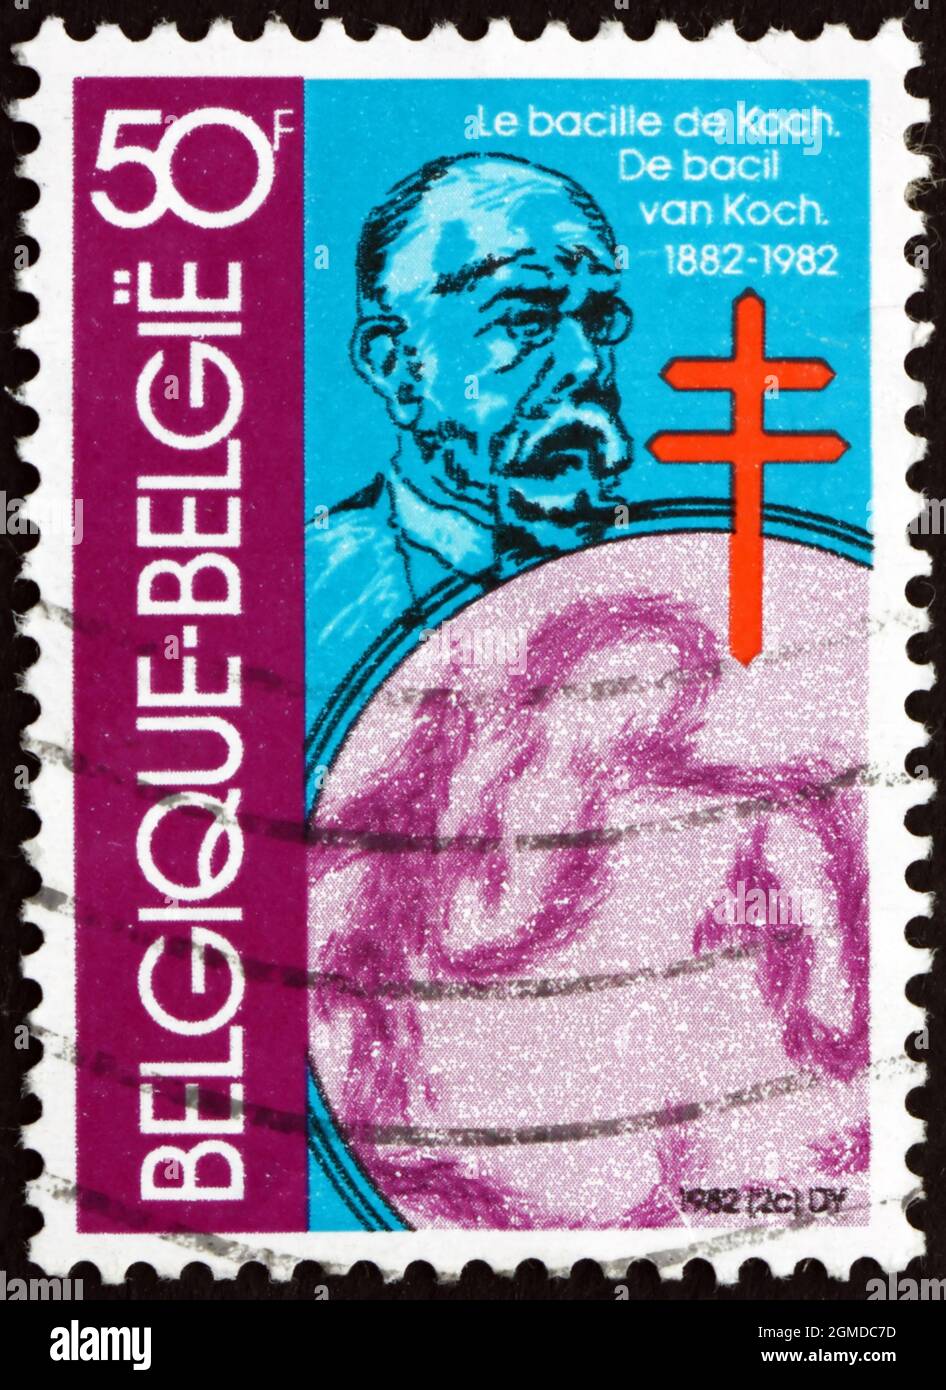 BELGIO - CIRCA 1982: Un francobollo stampato in Belgio mostra Robert Koch, medico tedesco, fondatore della moderna Bacteriologia, circa 1982 Foto Stock